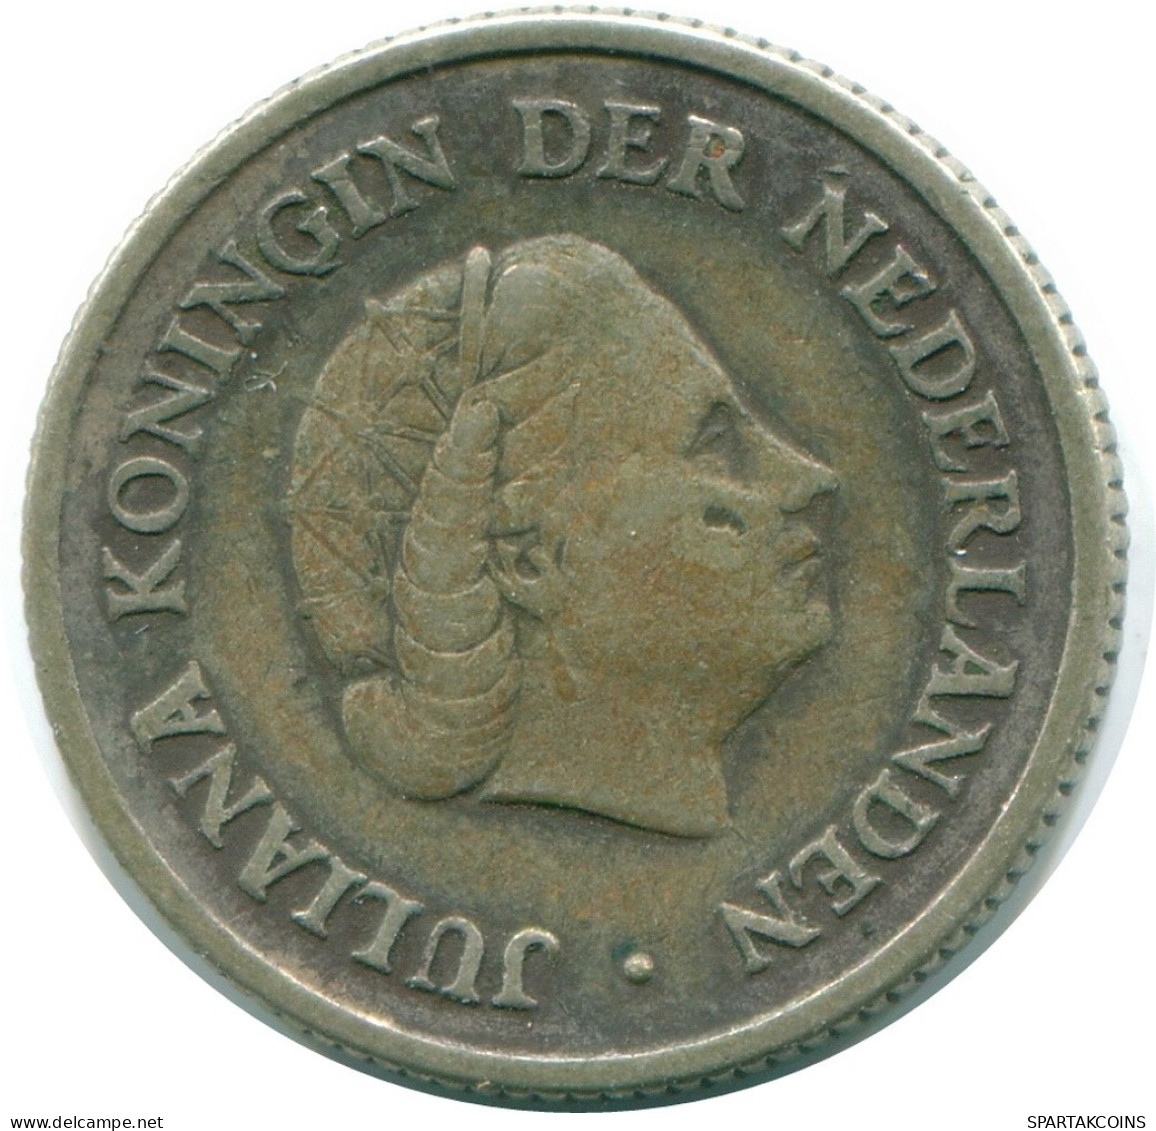 1/4 GULDEN 1956 NIEDERLÄNDISCHE ANTILLEN SILBER Koloniale Münze #NL10965.4.D.A - Netherlands Antilles